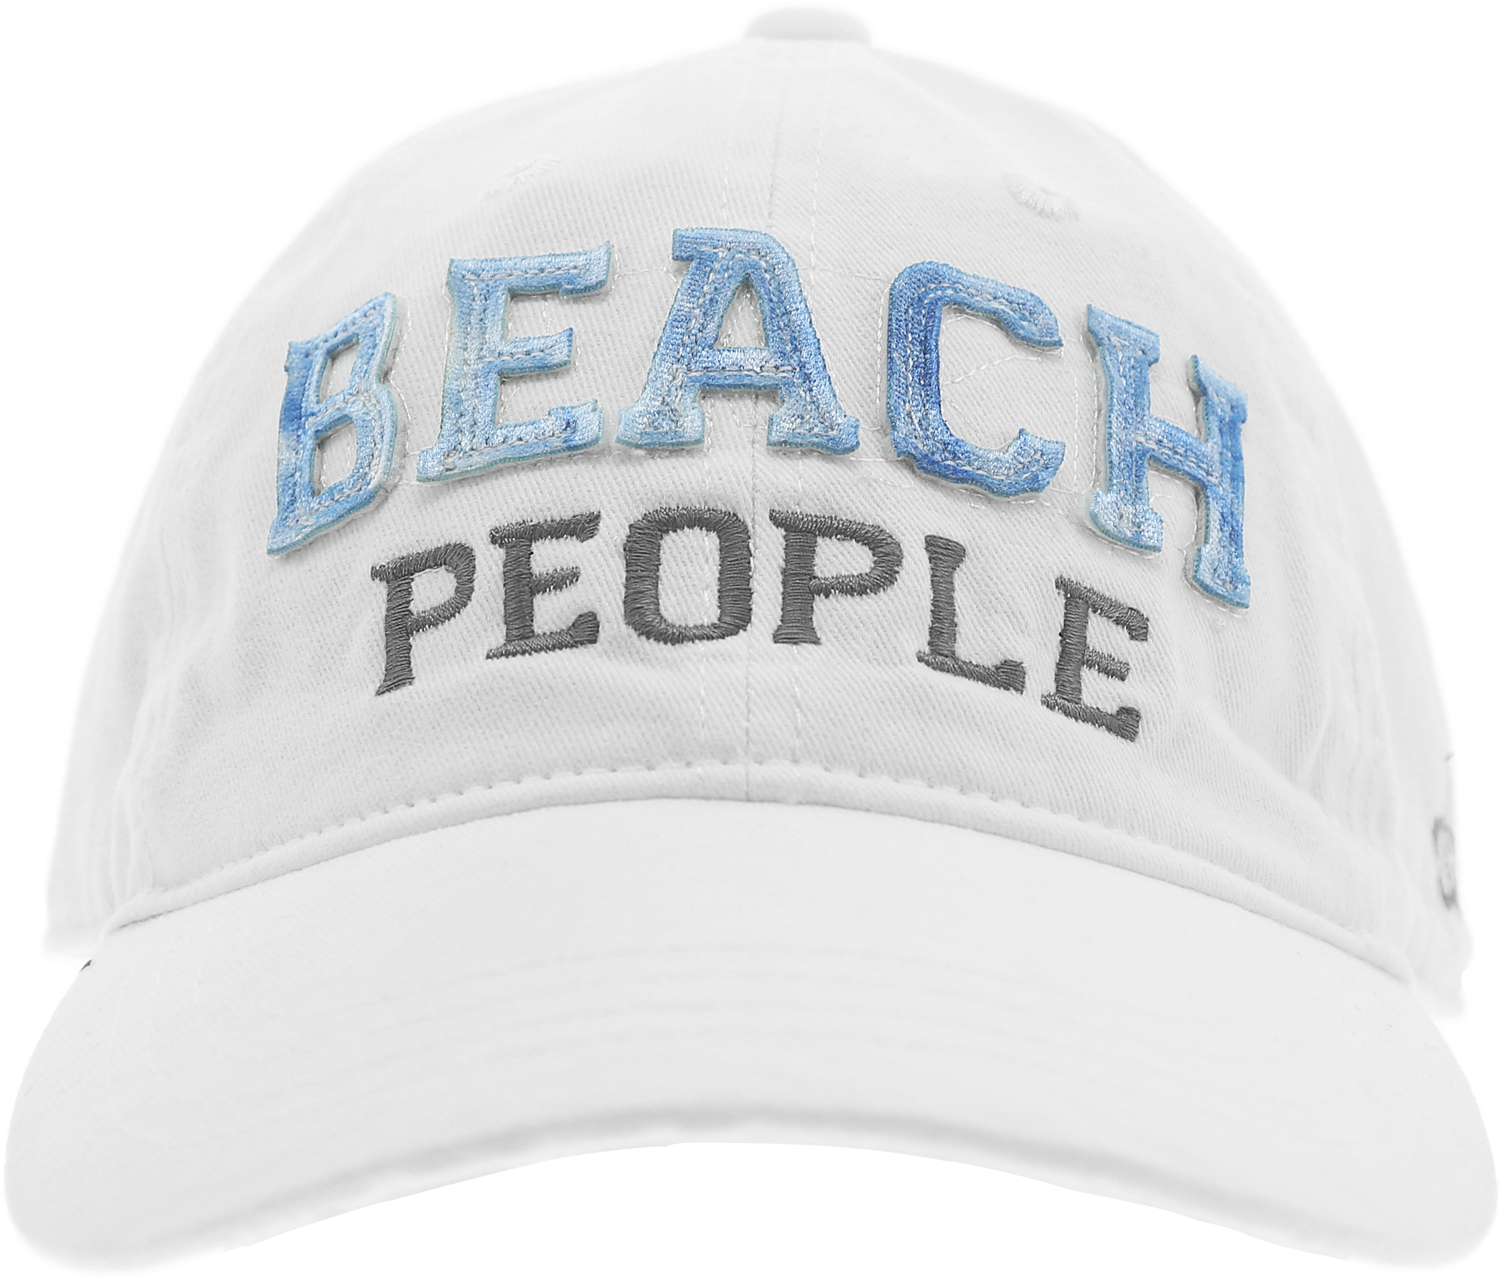 Beach People by We People - Beach People - White Adjustable Hat